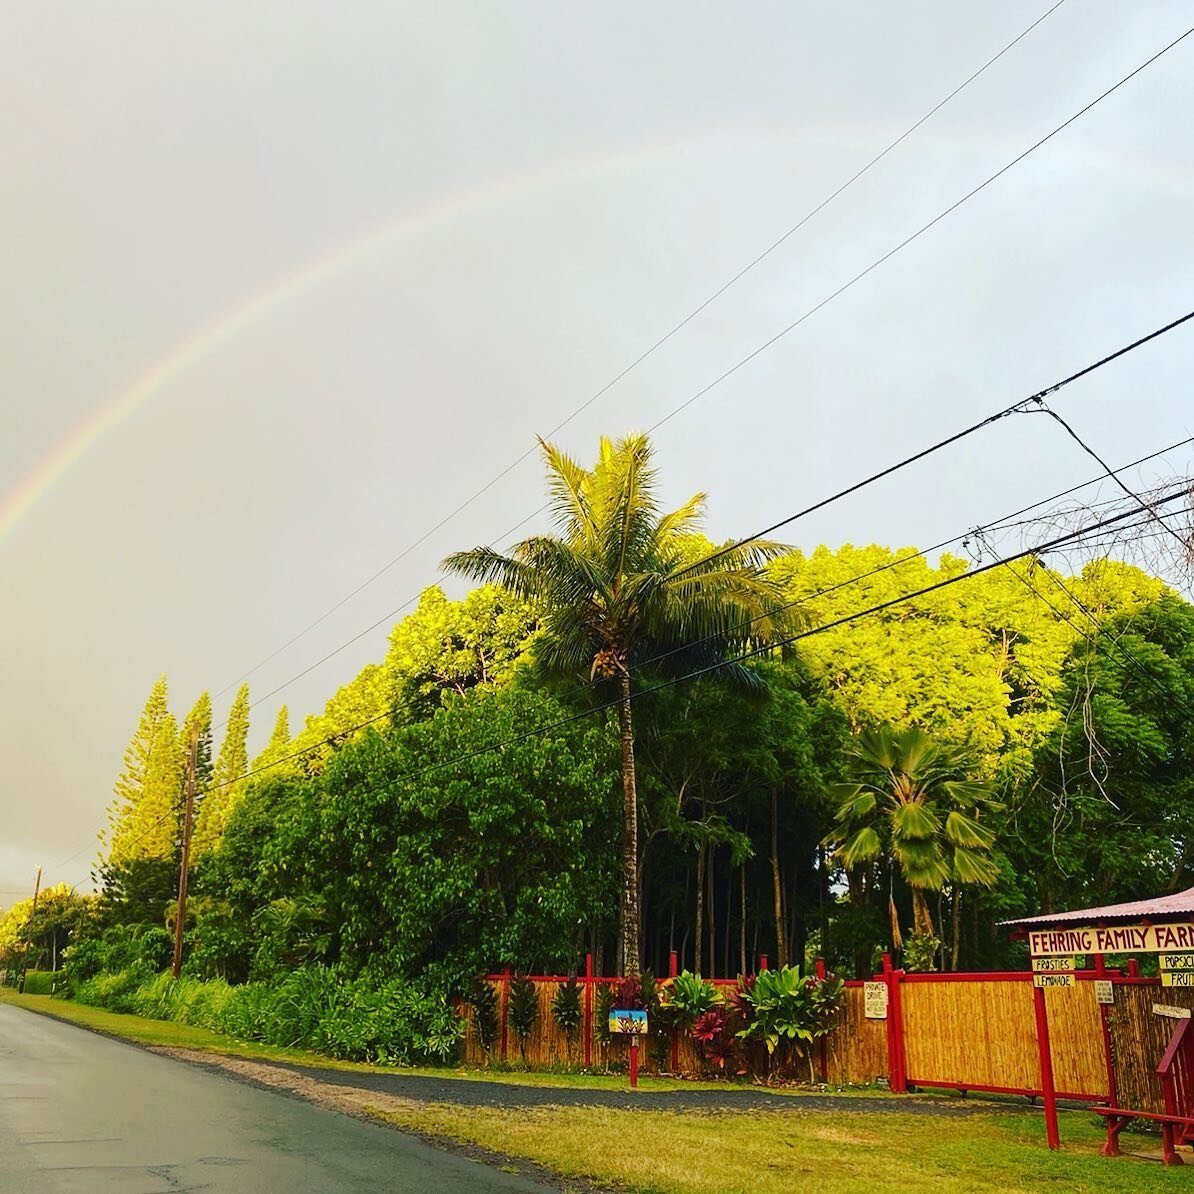 Happy 4th everyone! Celebrating rainbow style on the farm this morning! Photo by @adzowitch #farmrainbow #alohaolafarms #farmstand #kilauea